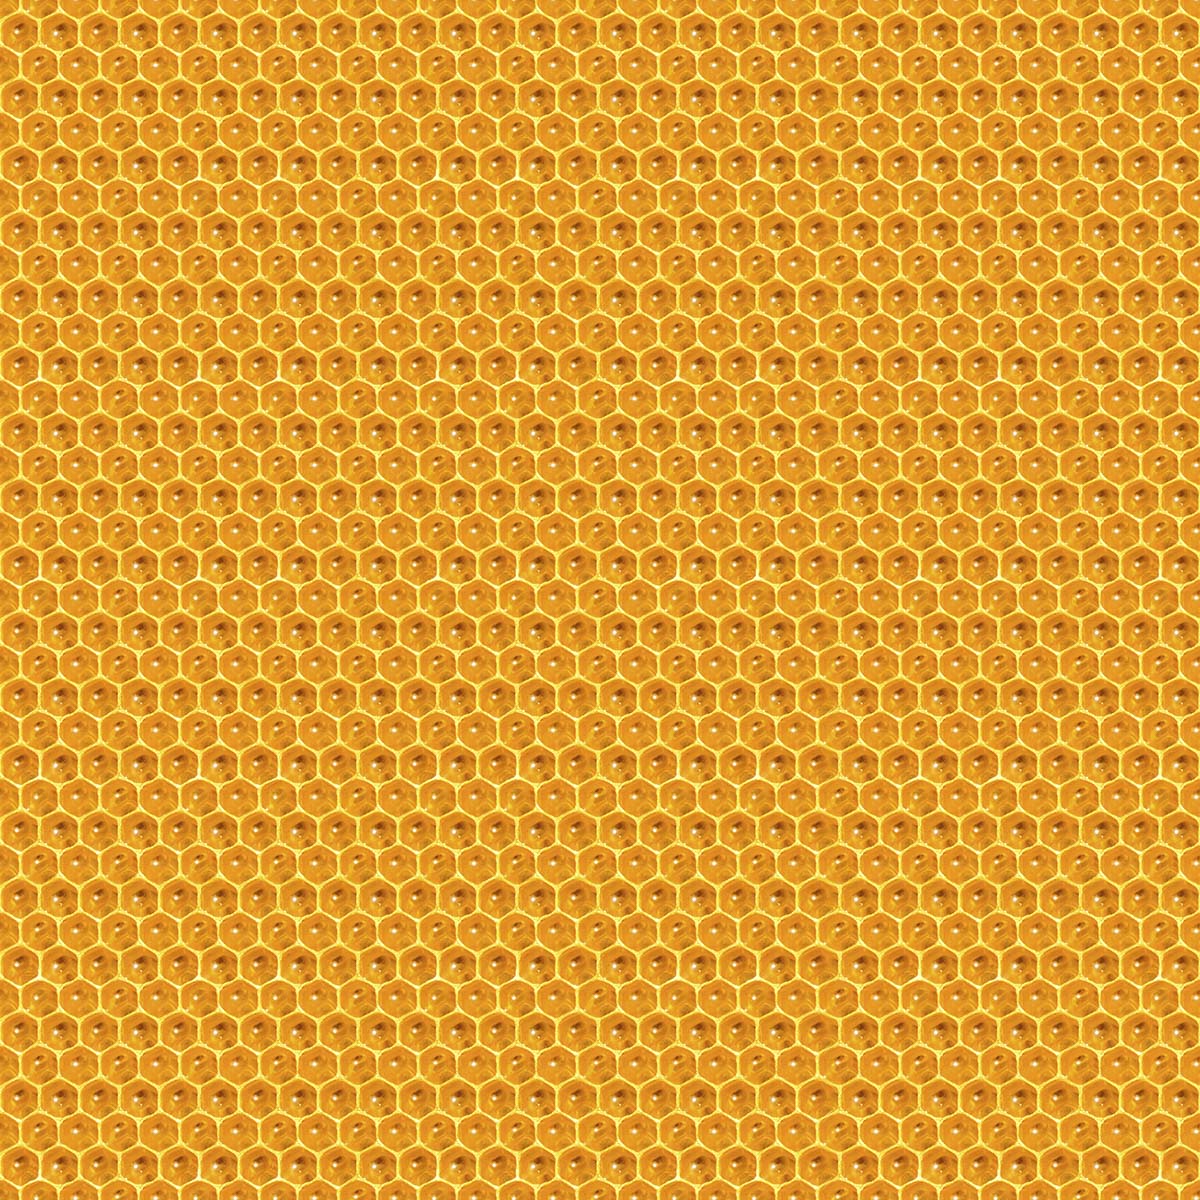 A close up of a pattern